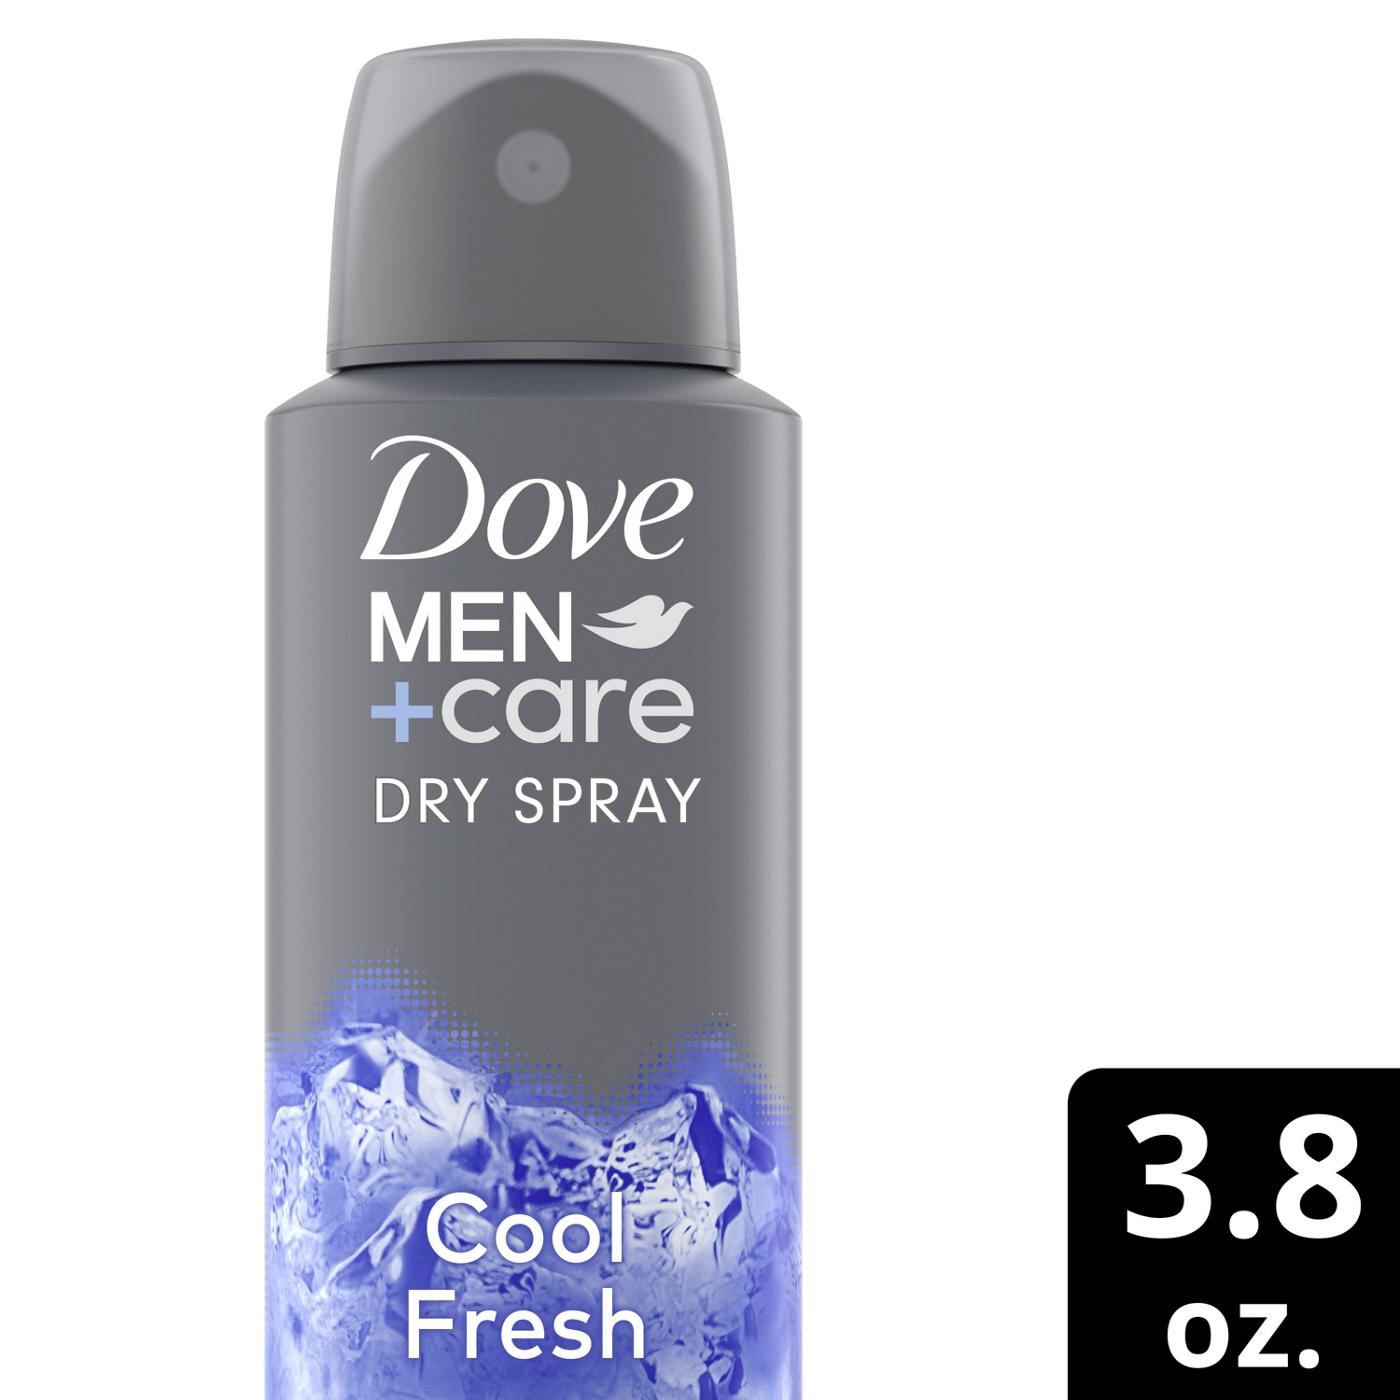 Dove Men+Care Antiperspirant Deodorant Dry Spray For Men Cool Fresh; image 6 of 7